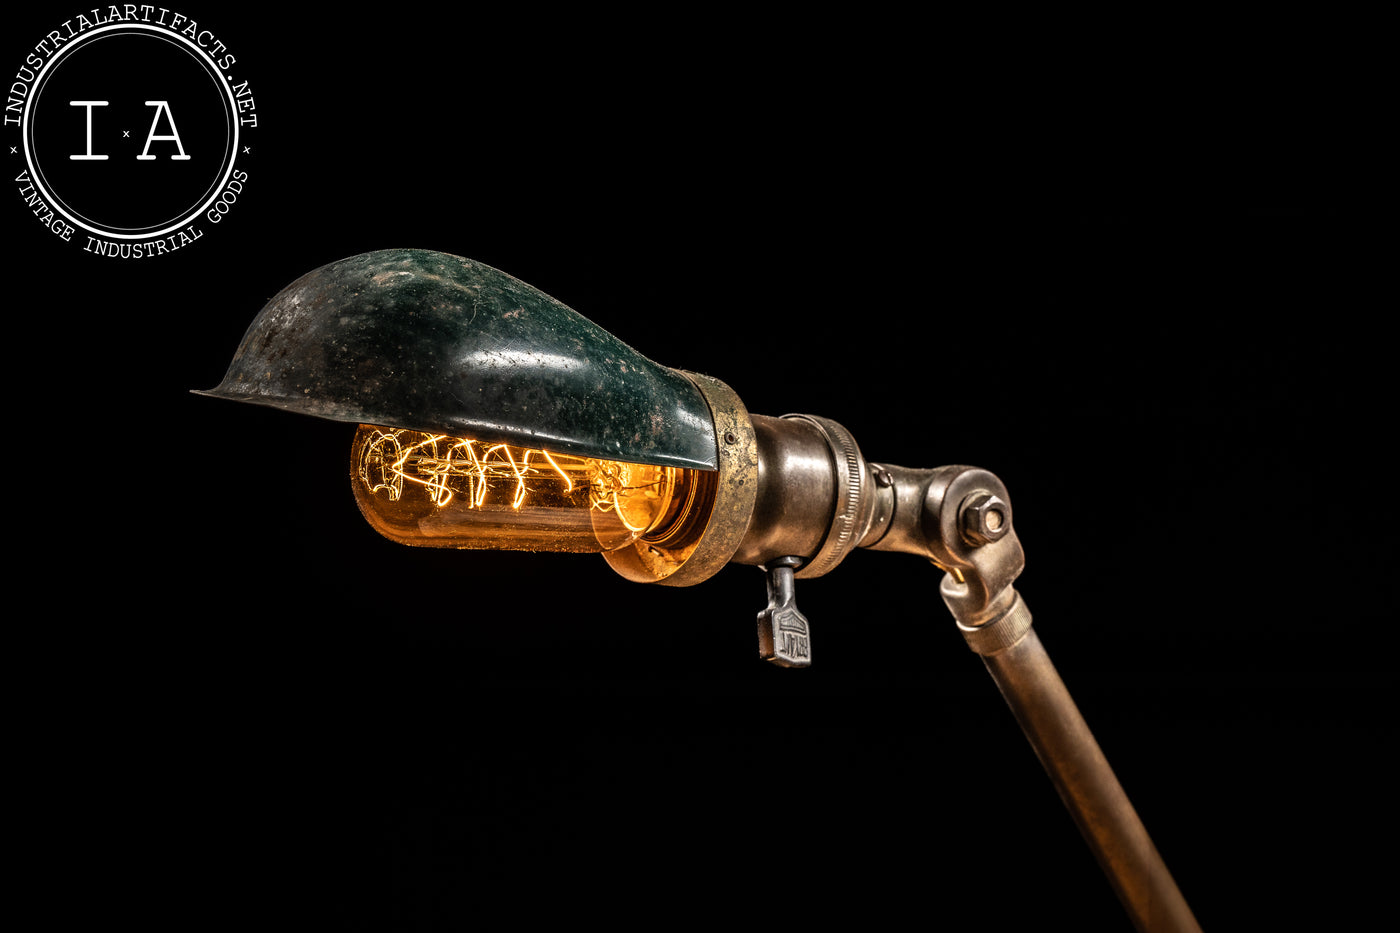 Vintage Brass Industrial Adjustable Lamp